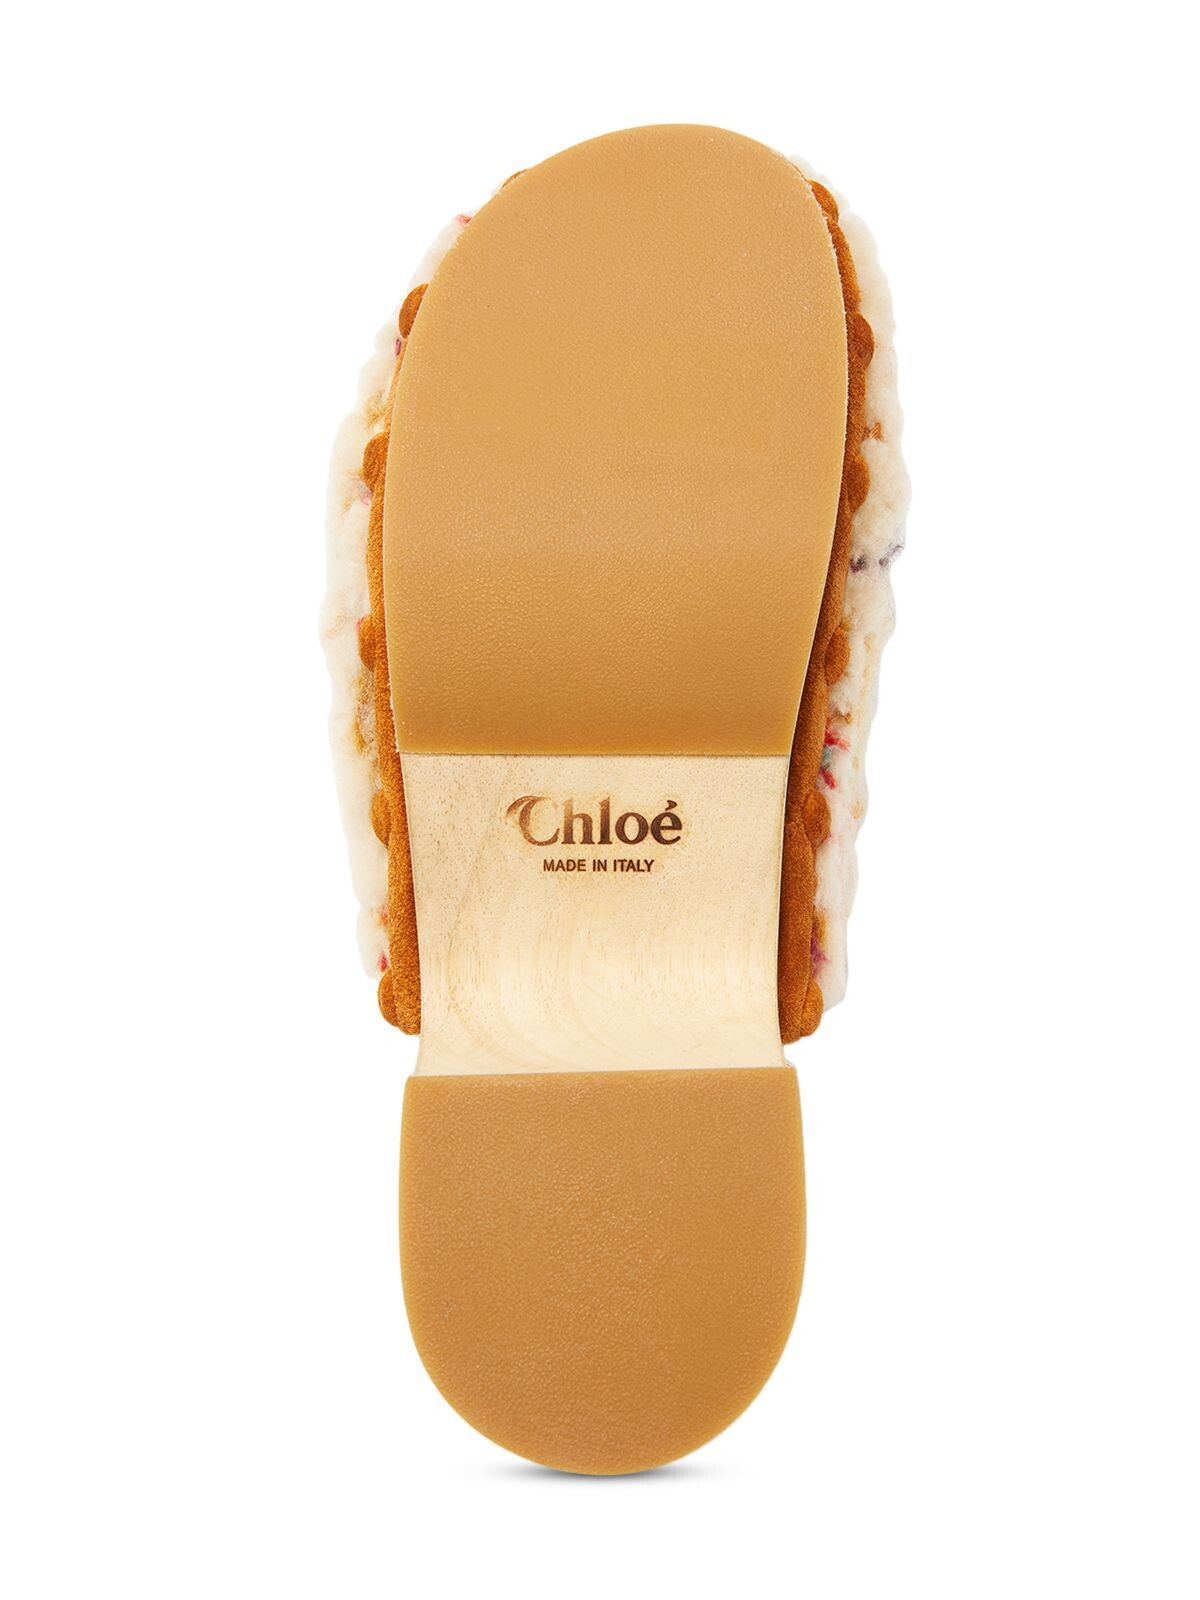 CHLOE Womens Beige Patterned 1" Platform Comfort Joy Round Toe Block Heel Slip On Clogs Shoes